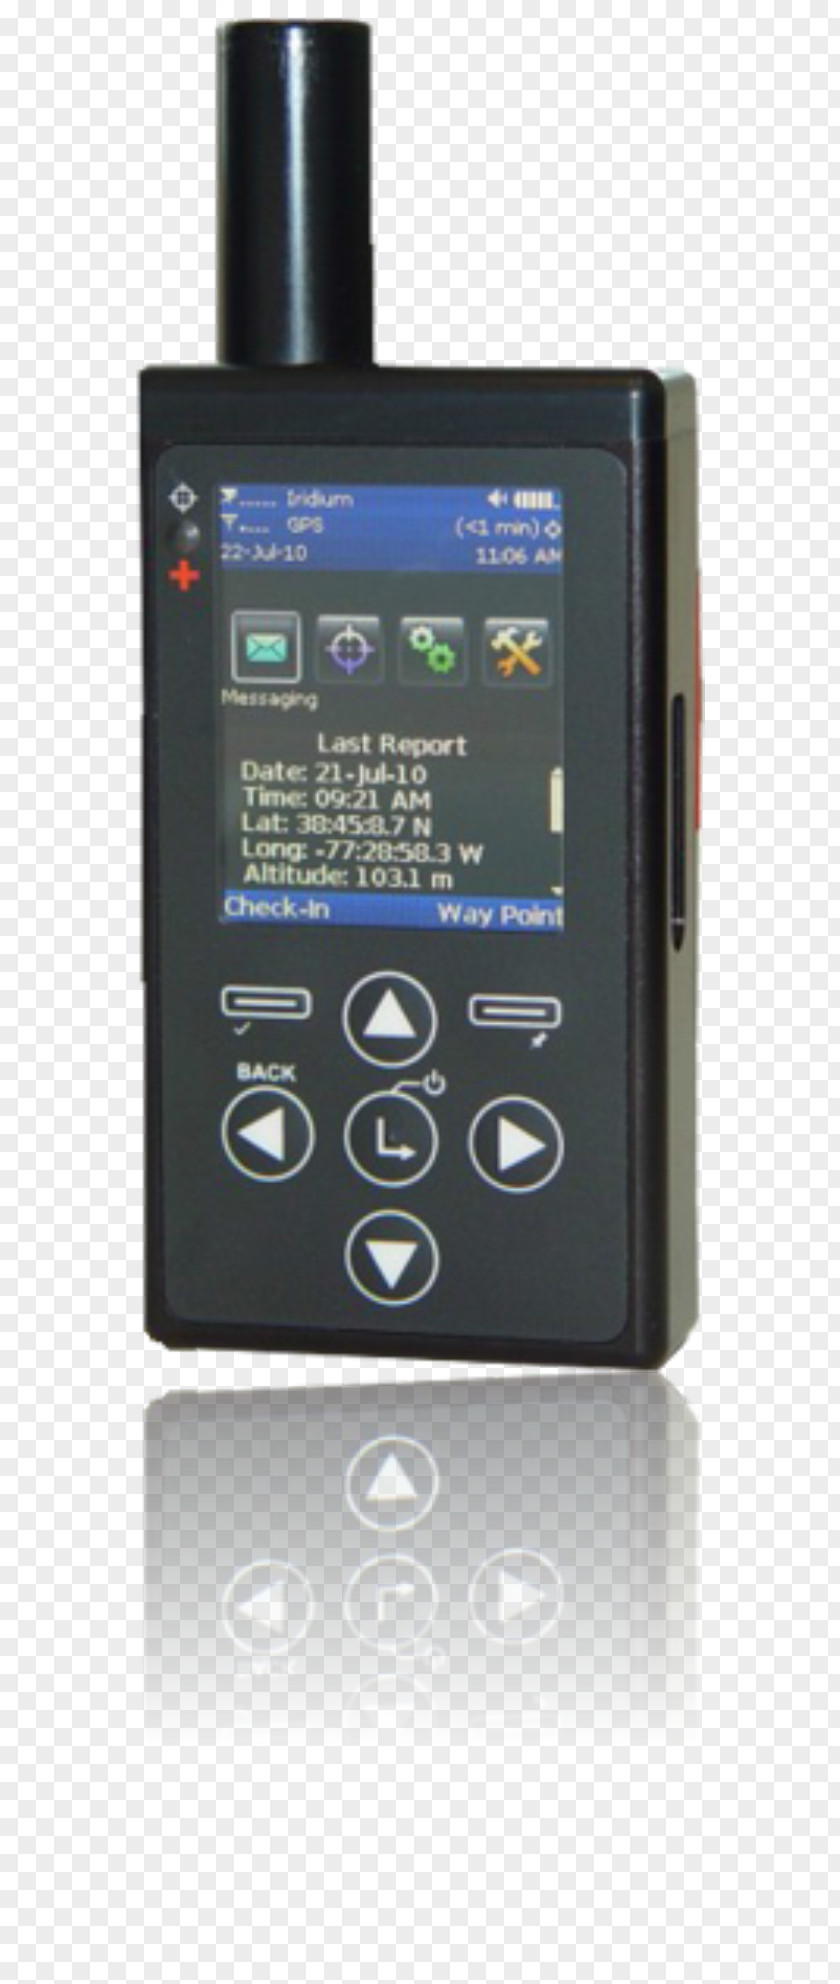 Shout Iridium Communications Satellite Phones Constellation GPS Tracking Unit PNG